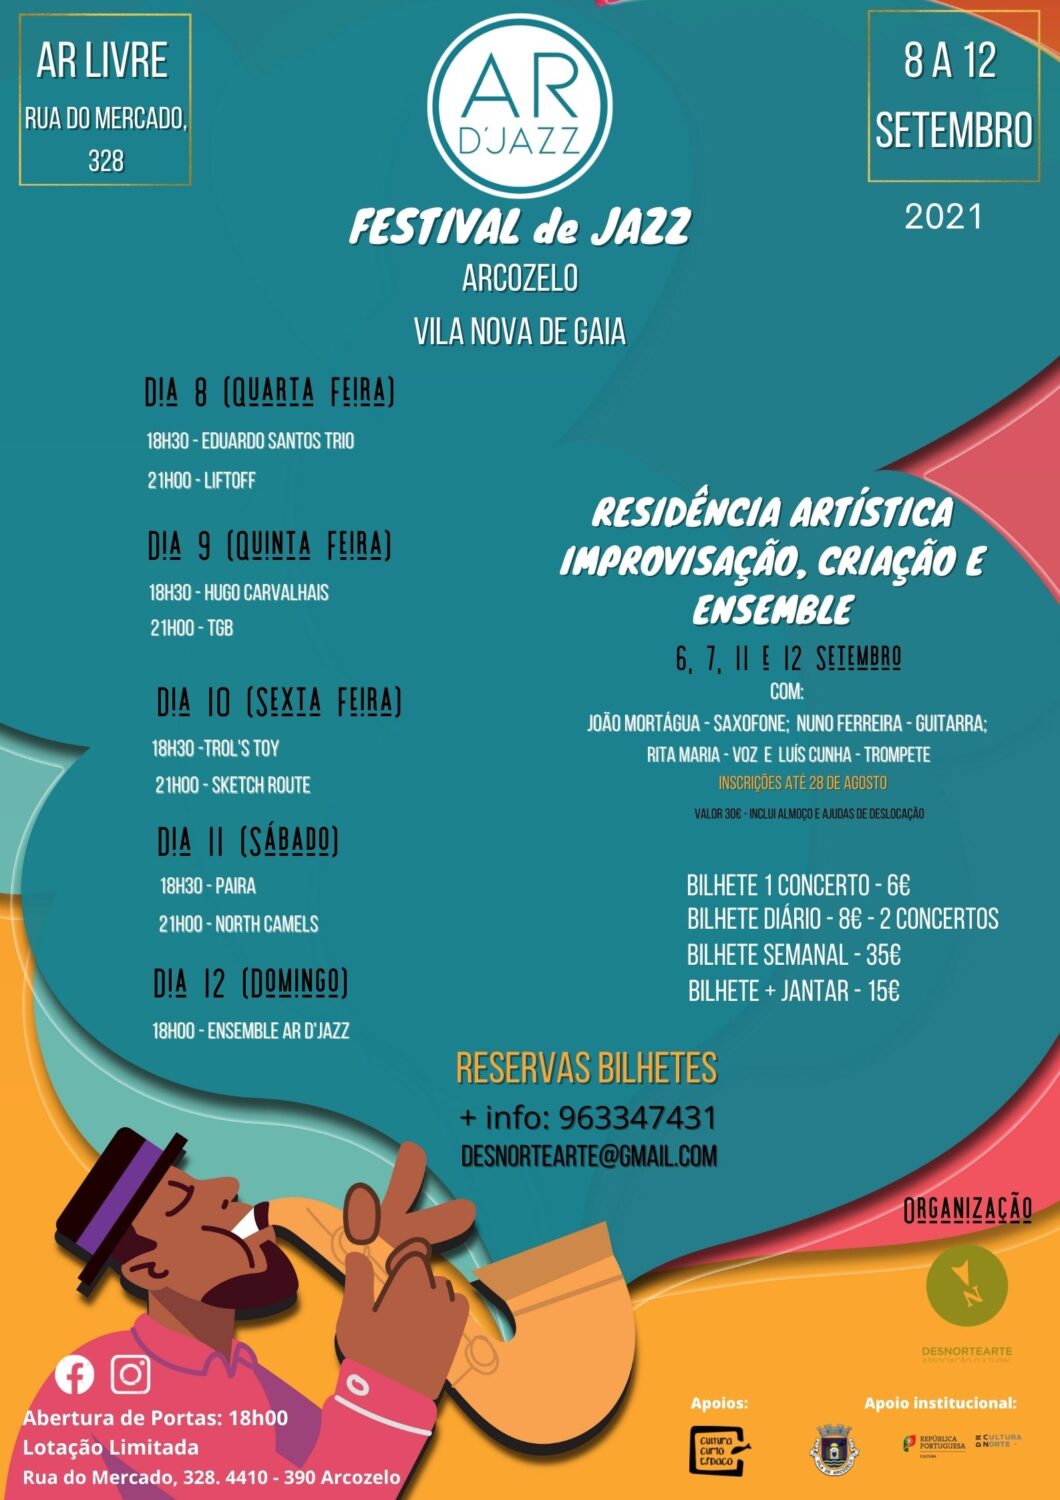 Ar d'Jazz - Festival de Jazz de Arcozelo